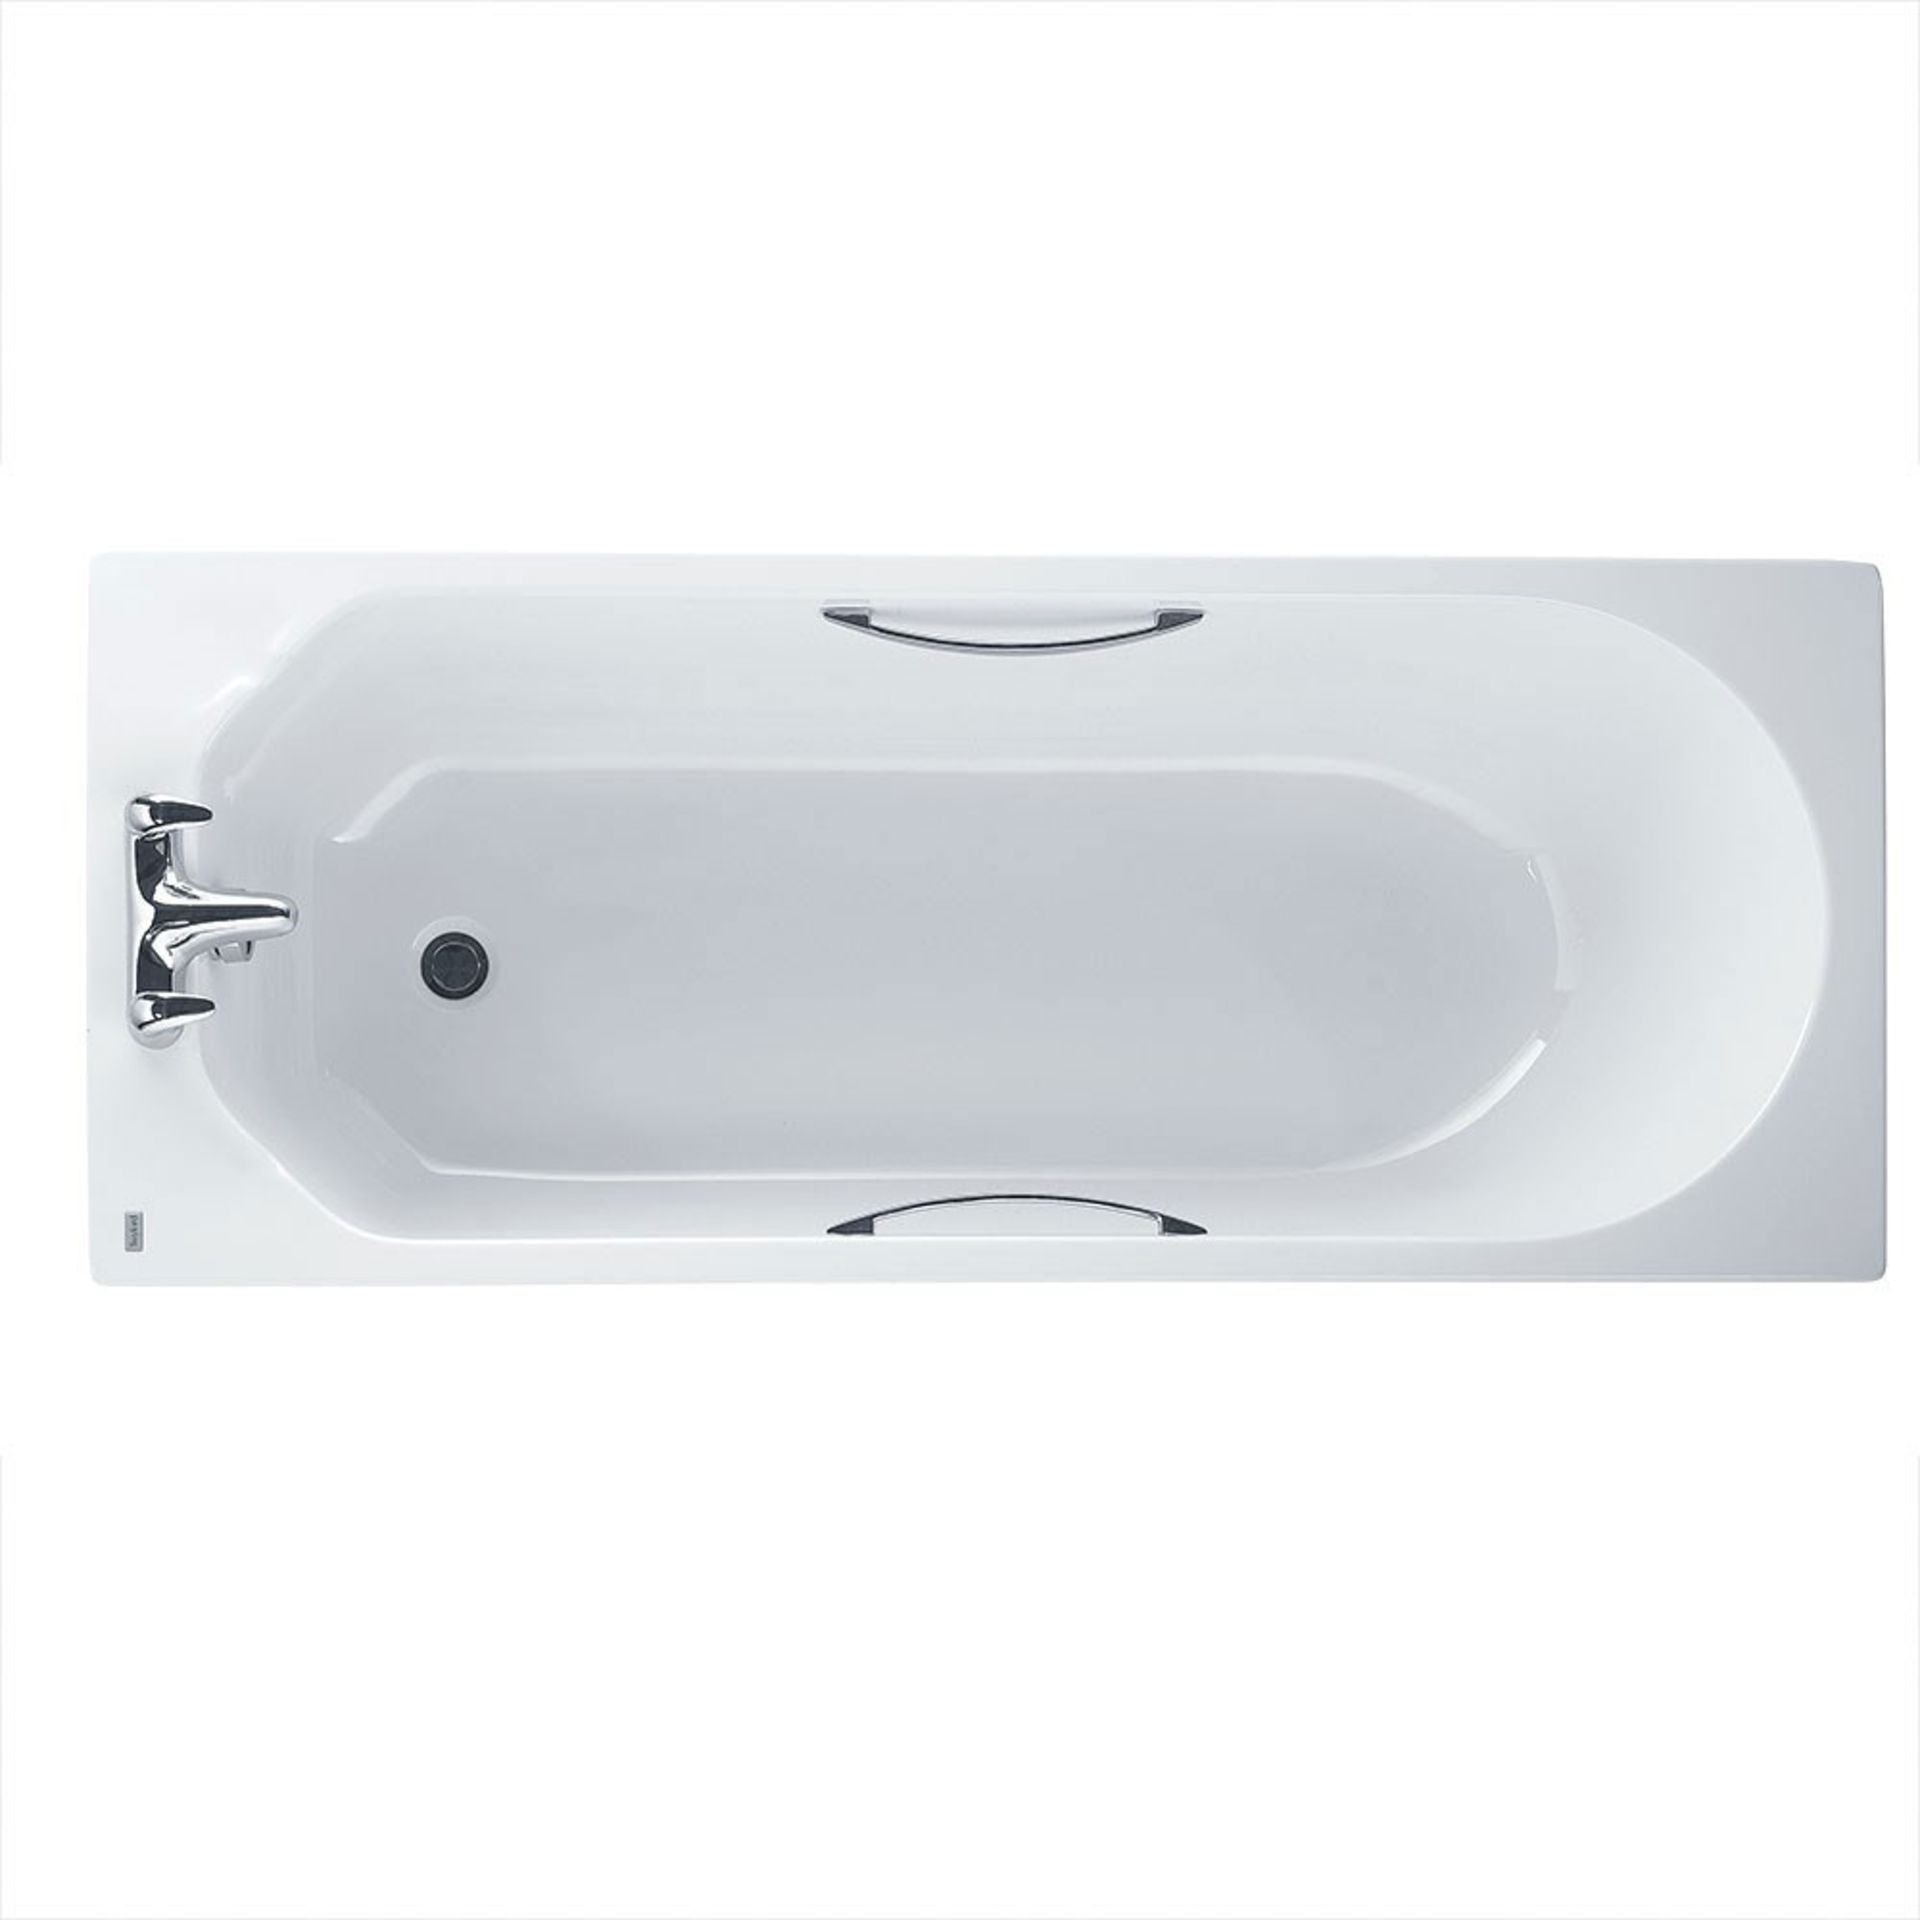 (CK8) Twyford OPTION 1700x700mm Rectangular Bath. White Everyone loves a nice relaxing soak in...